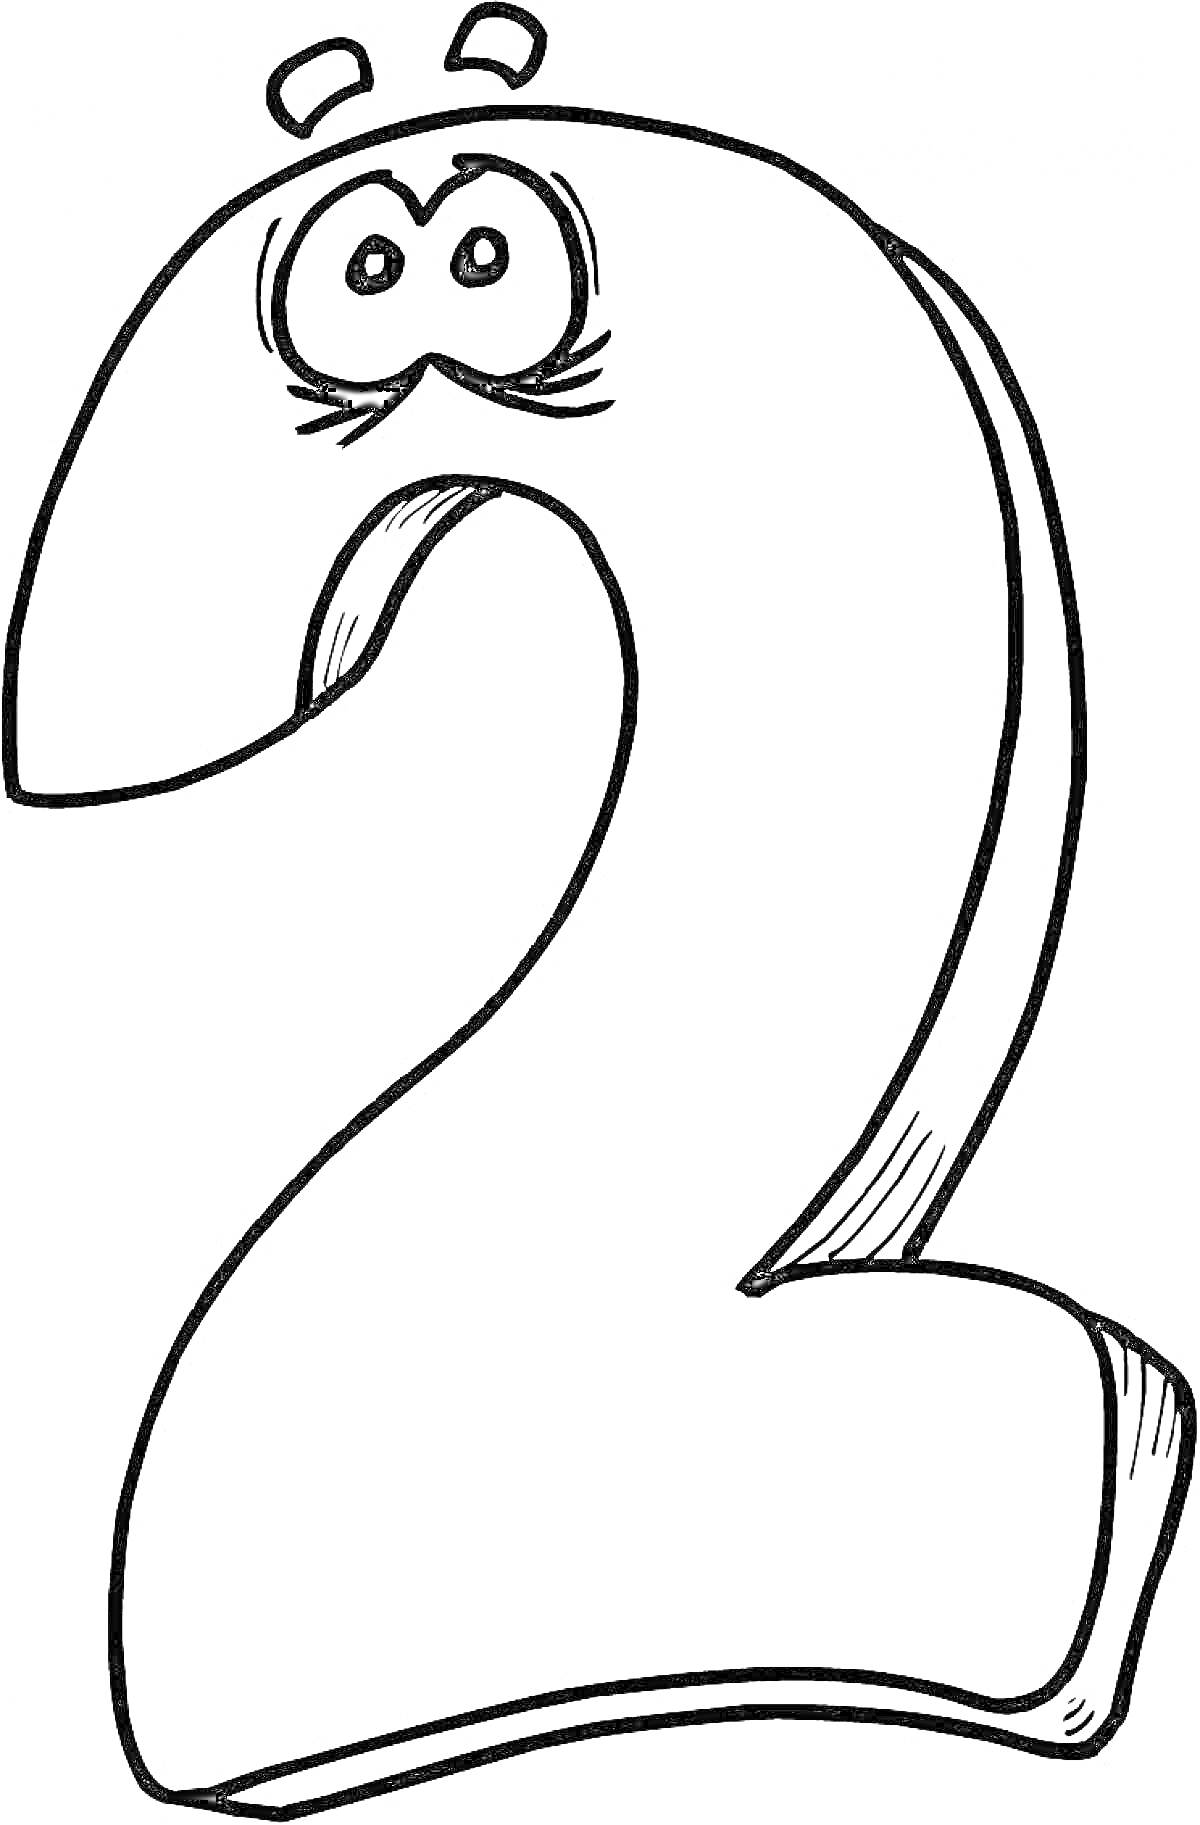 Раскраска Цифра 2 с глазами и ресницами